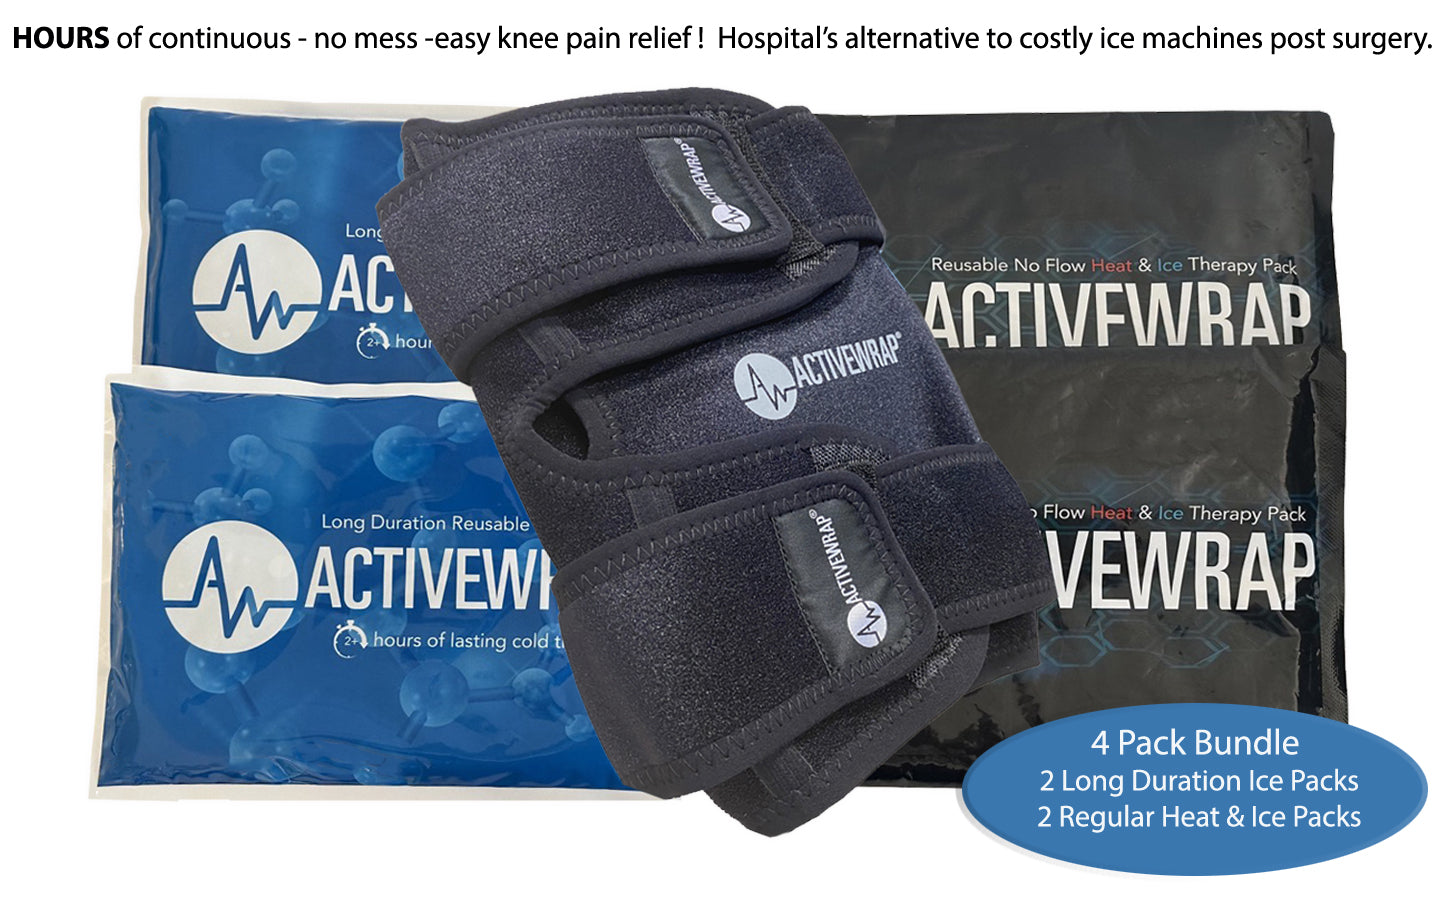 REVIX Ice Pack for Lower Back Pain Cold Compress Ice Bag for Shoulder